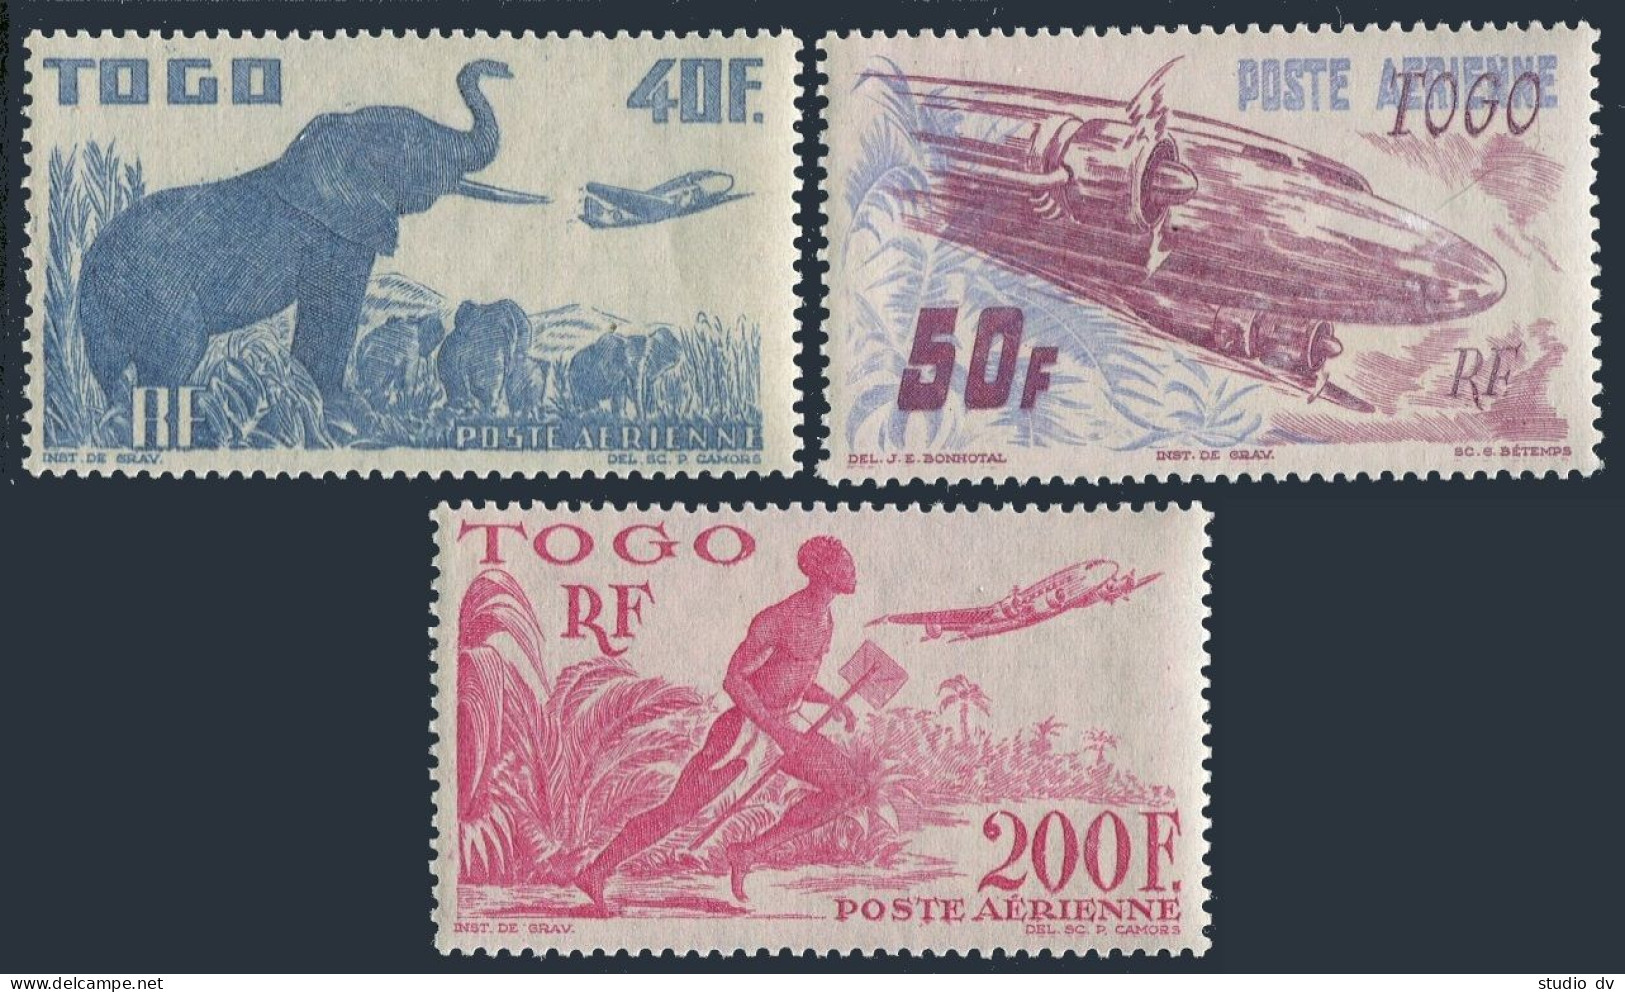 Togo C14-C15,C17,MNH.Mi 213-214,216. 1947.Transport,Elephants,Planes,Post Runner - Togo (1960-...)